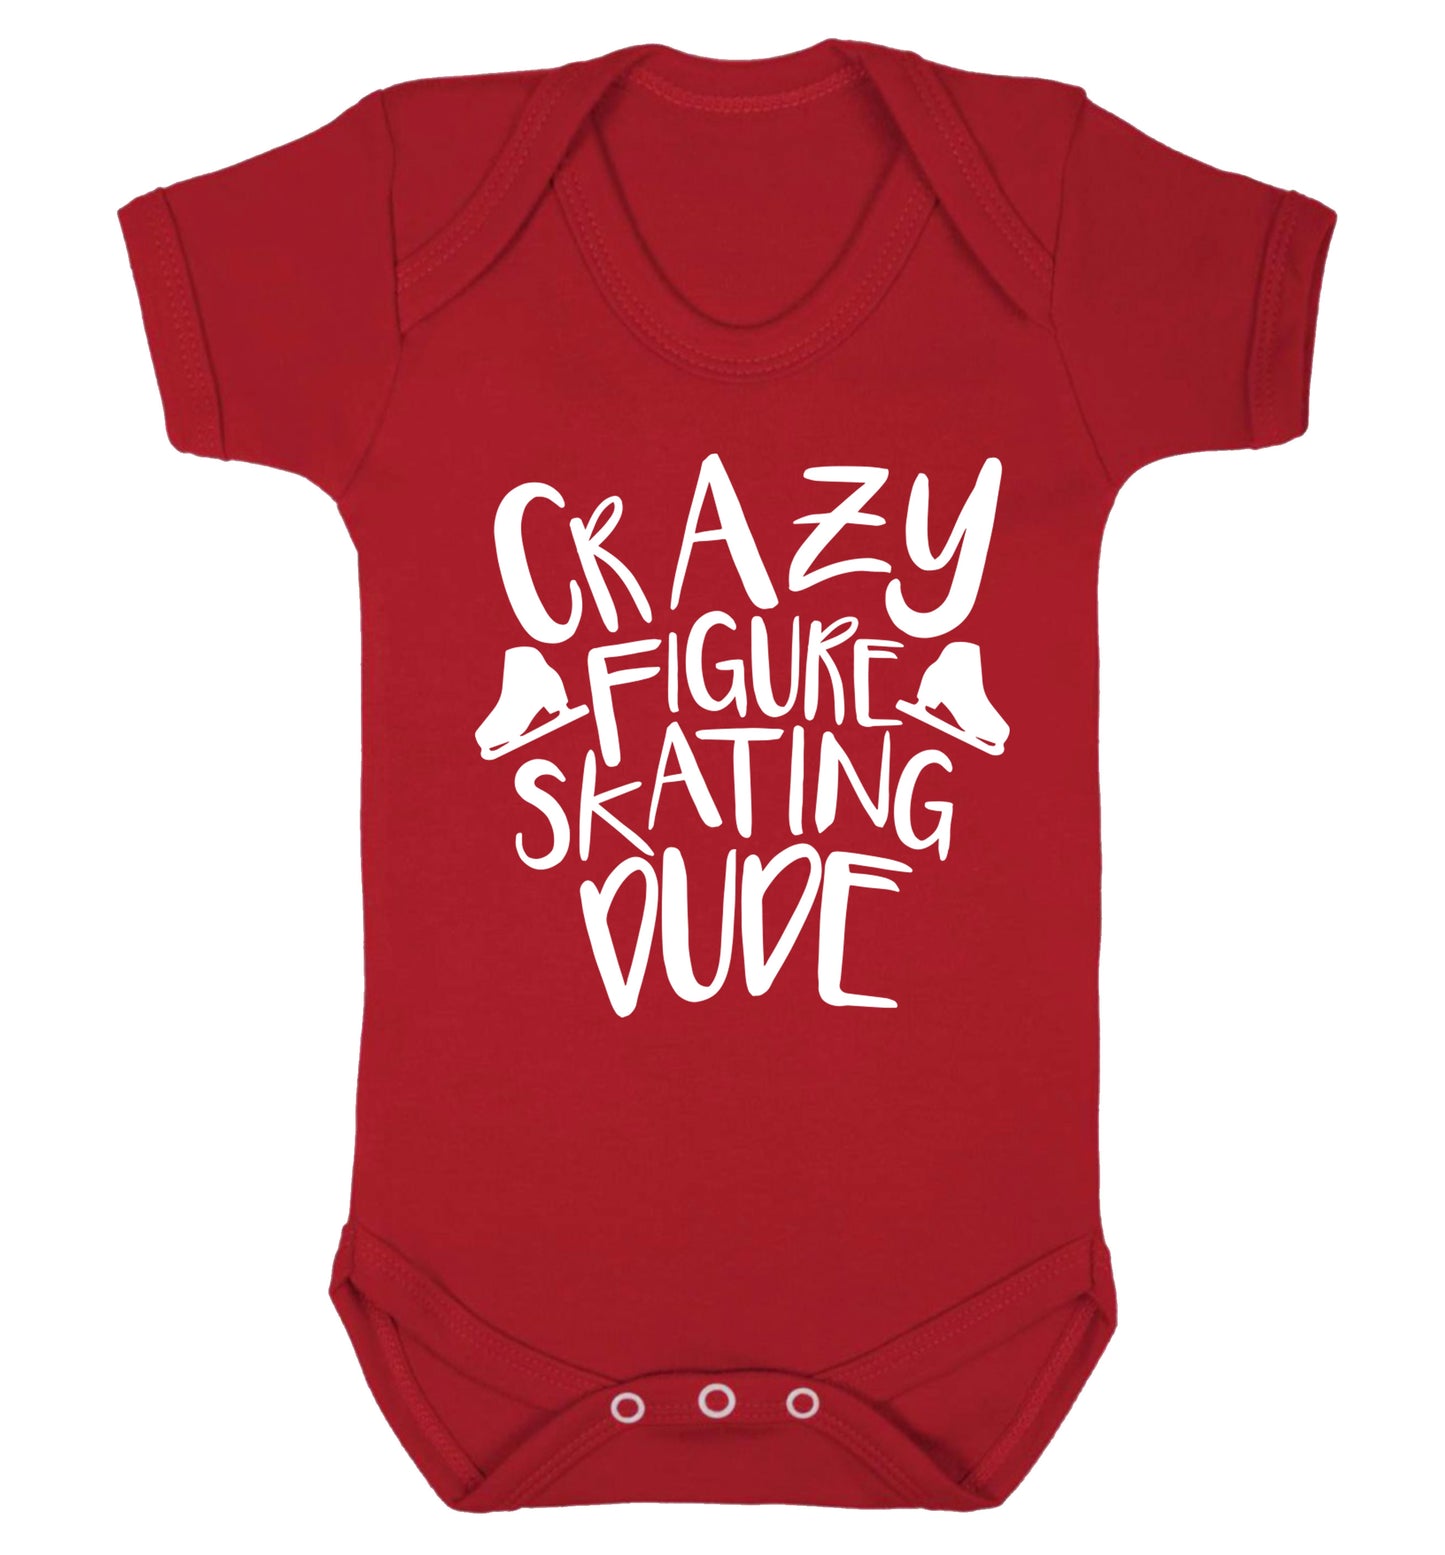 Crazy figure skating dude Baby Vest red 18-24 months